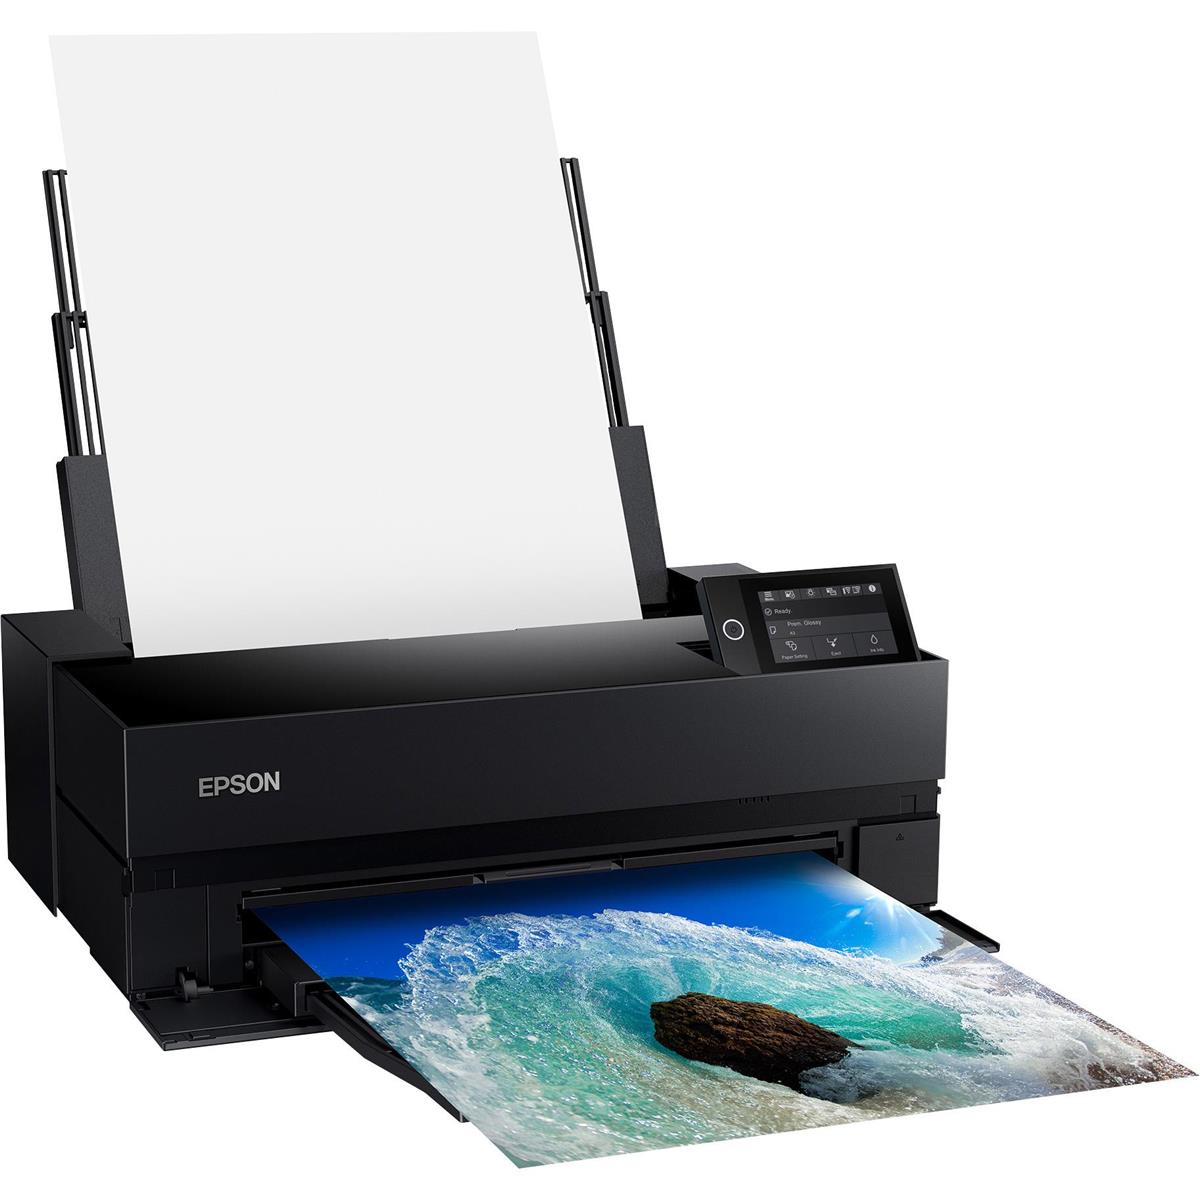 Epson SureColor P900 17" Photo Printer